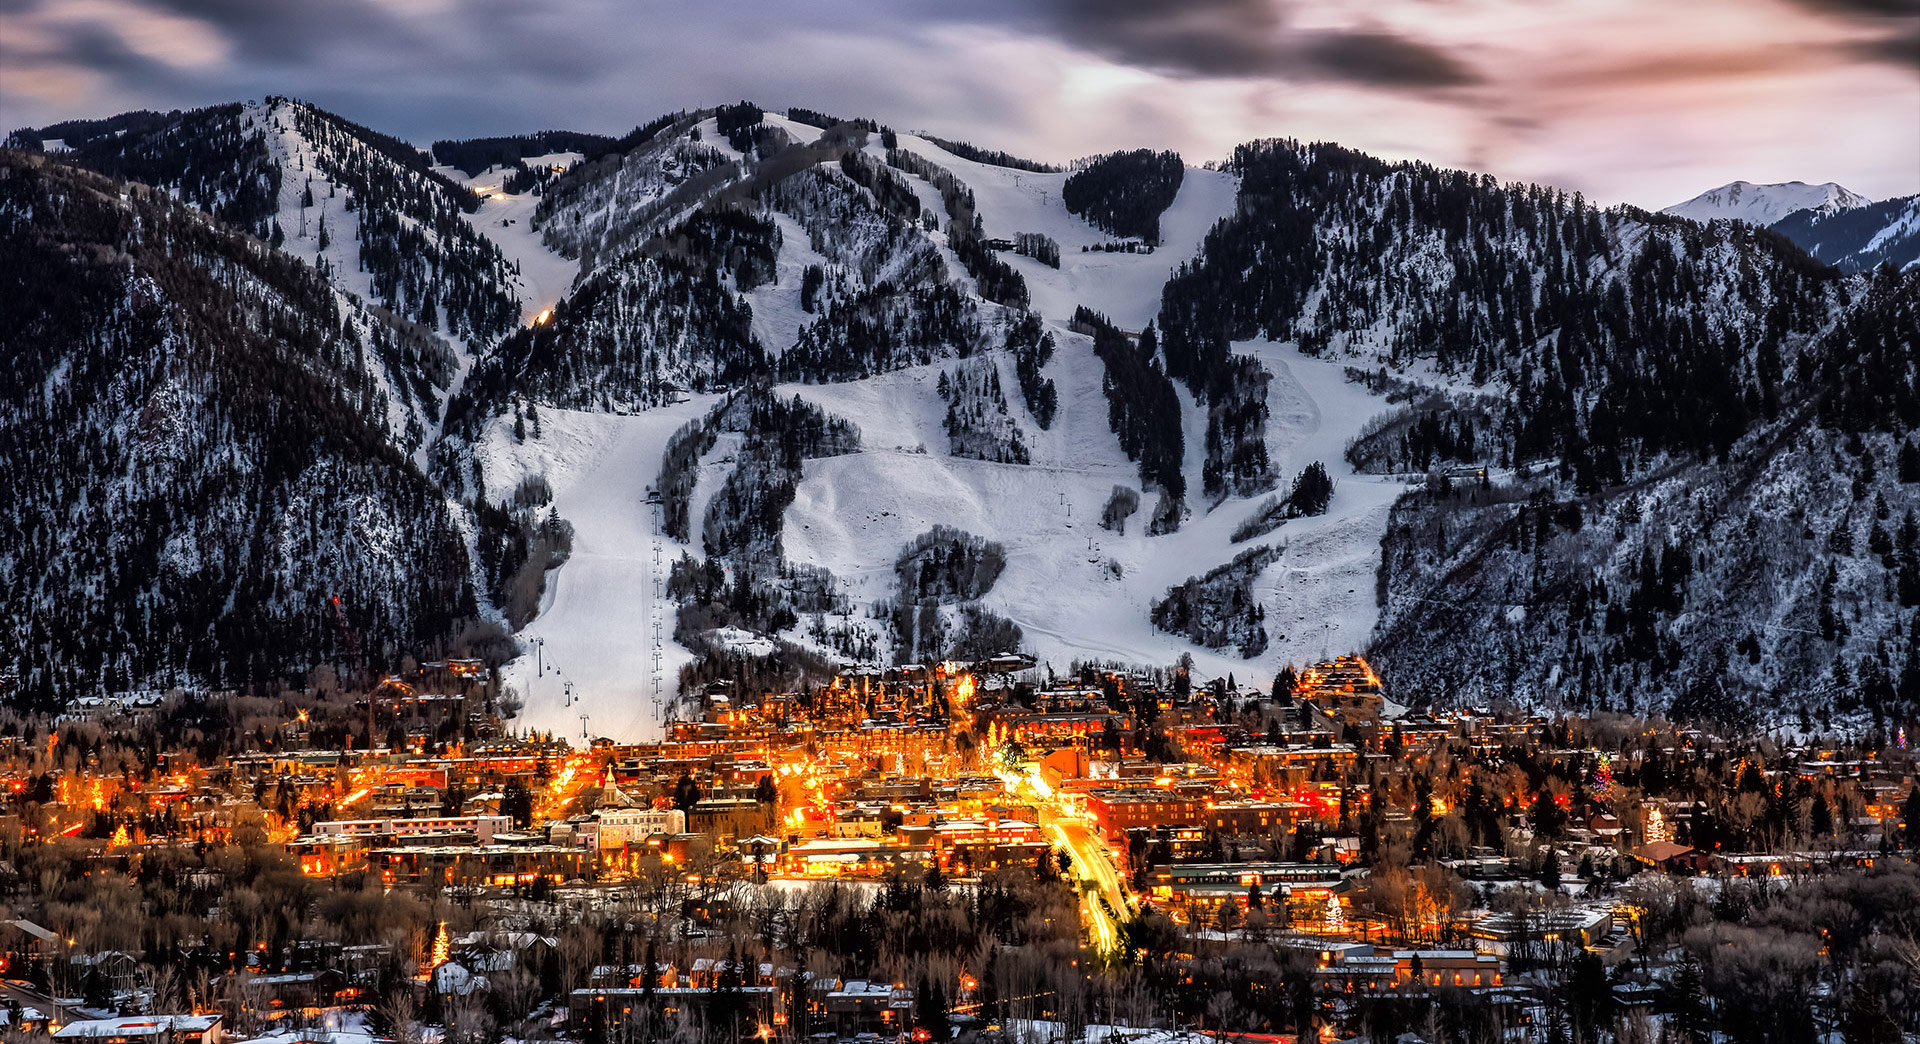 Display Image for Aspen at night with ski runs